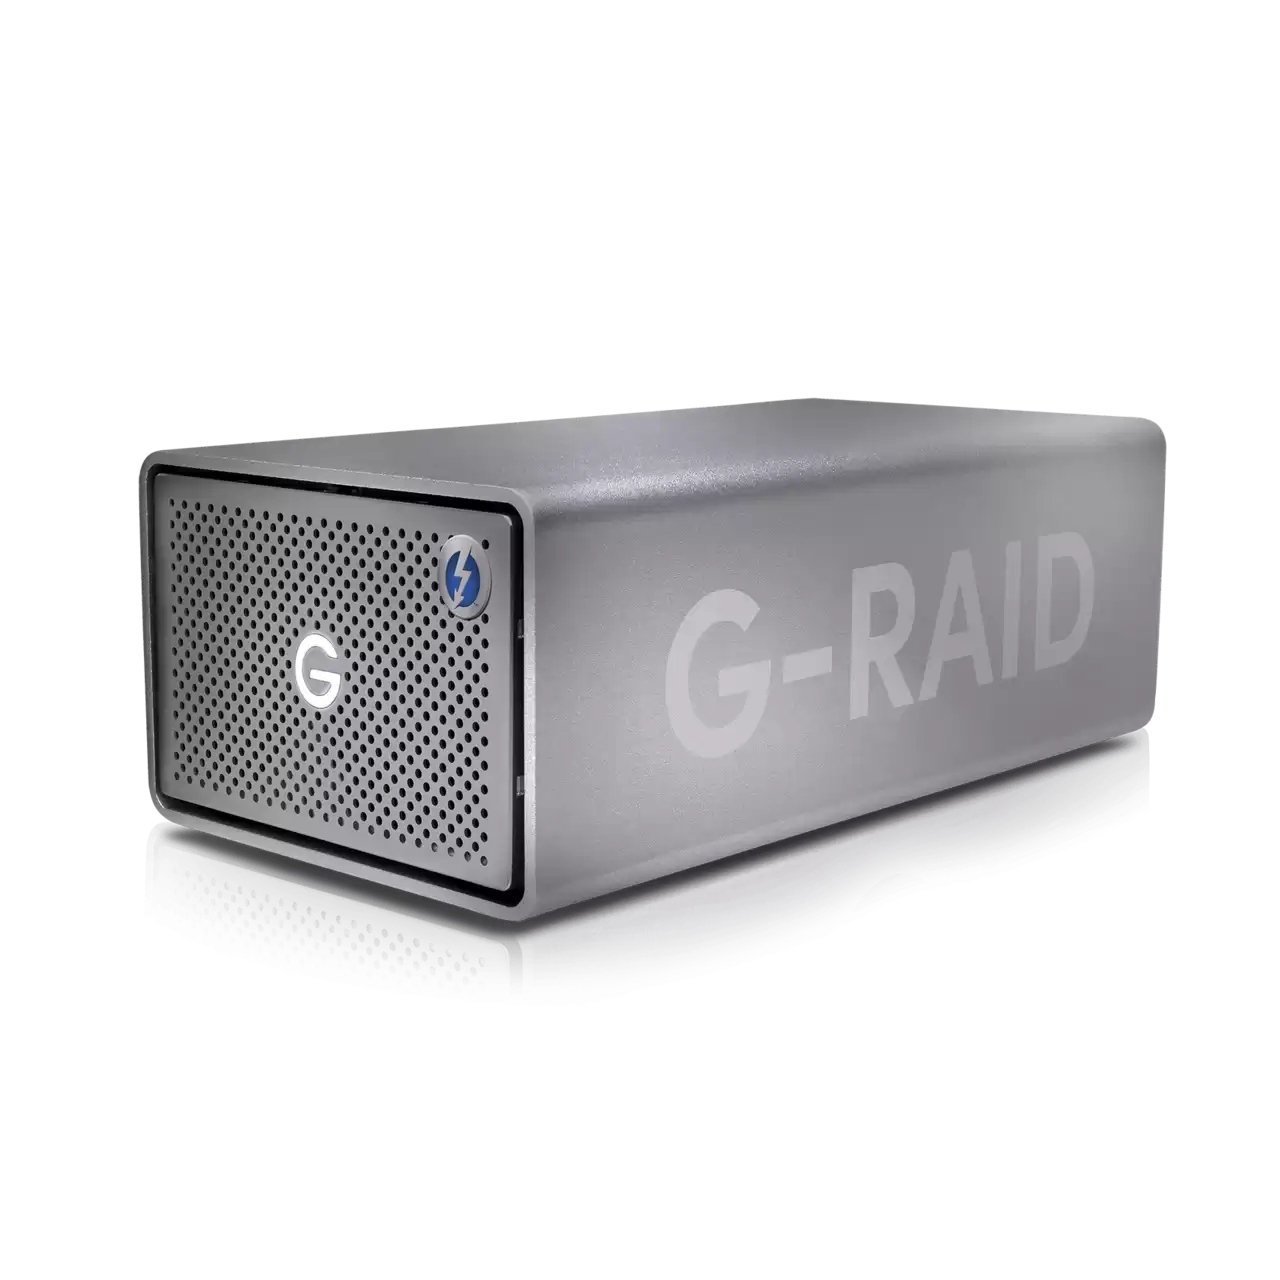  Professional G-RAID 2 24TB 3.5inch Thunderbolt 3 7200RPM USB-C HDMI Port Enterprise-Class 2-Bay Desktop Drive - Space Grey